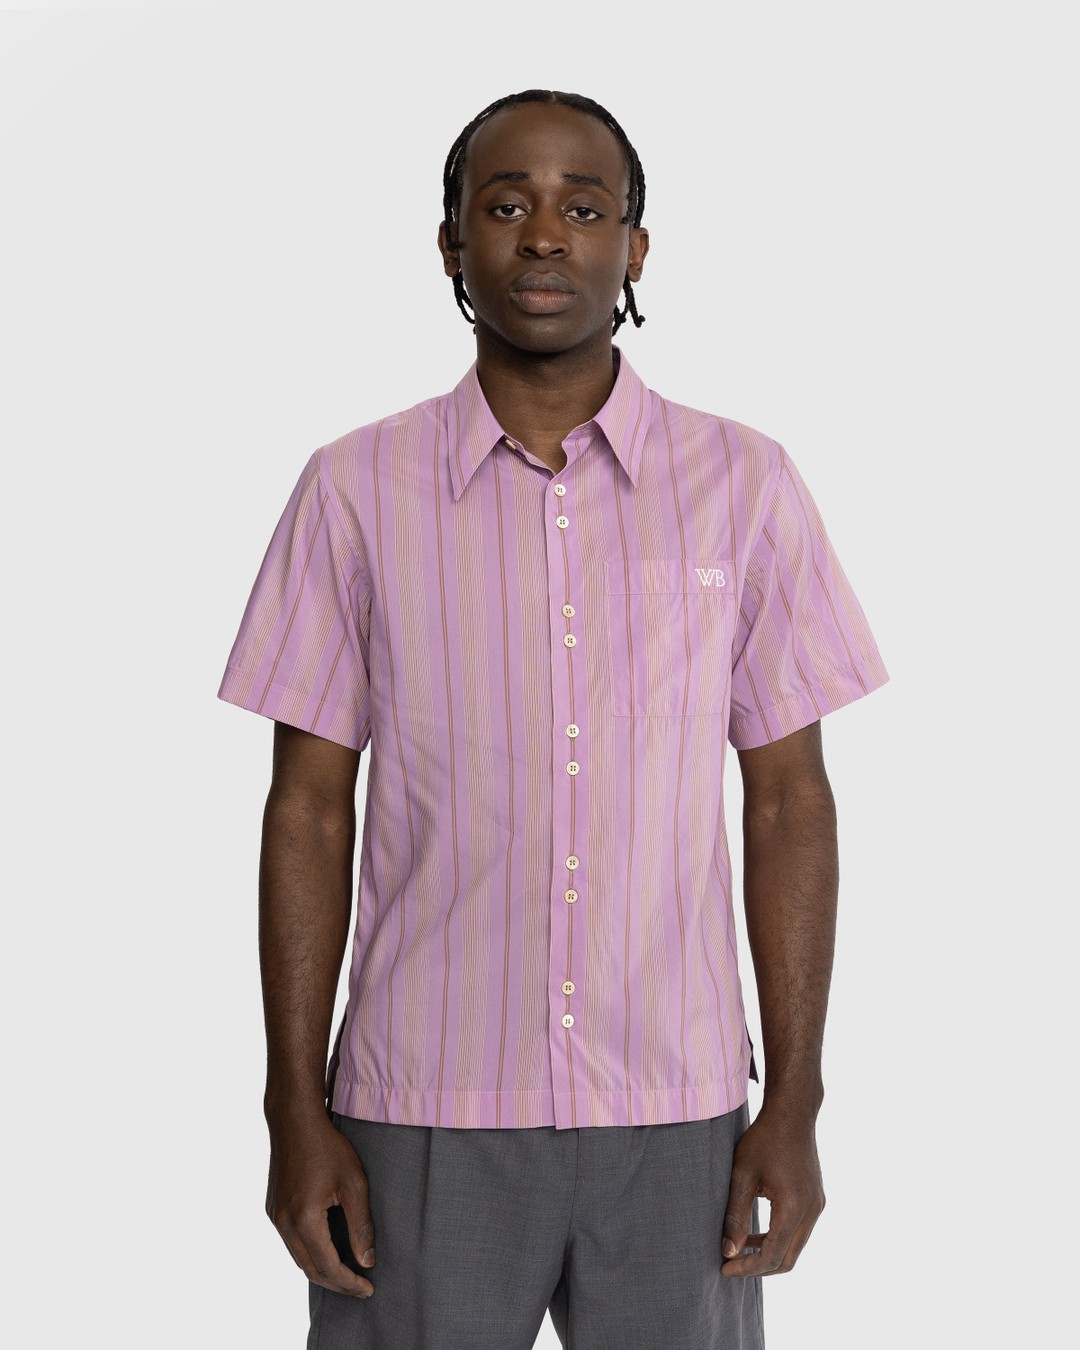 Wales Bonner – Rhythm Striped Shirt Pink - Shortsleeve Shirts - Pink - Image 2